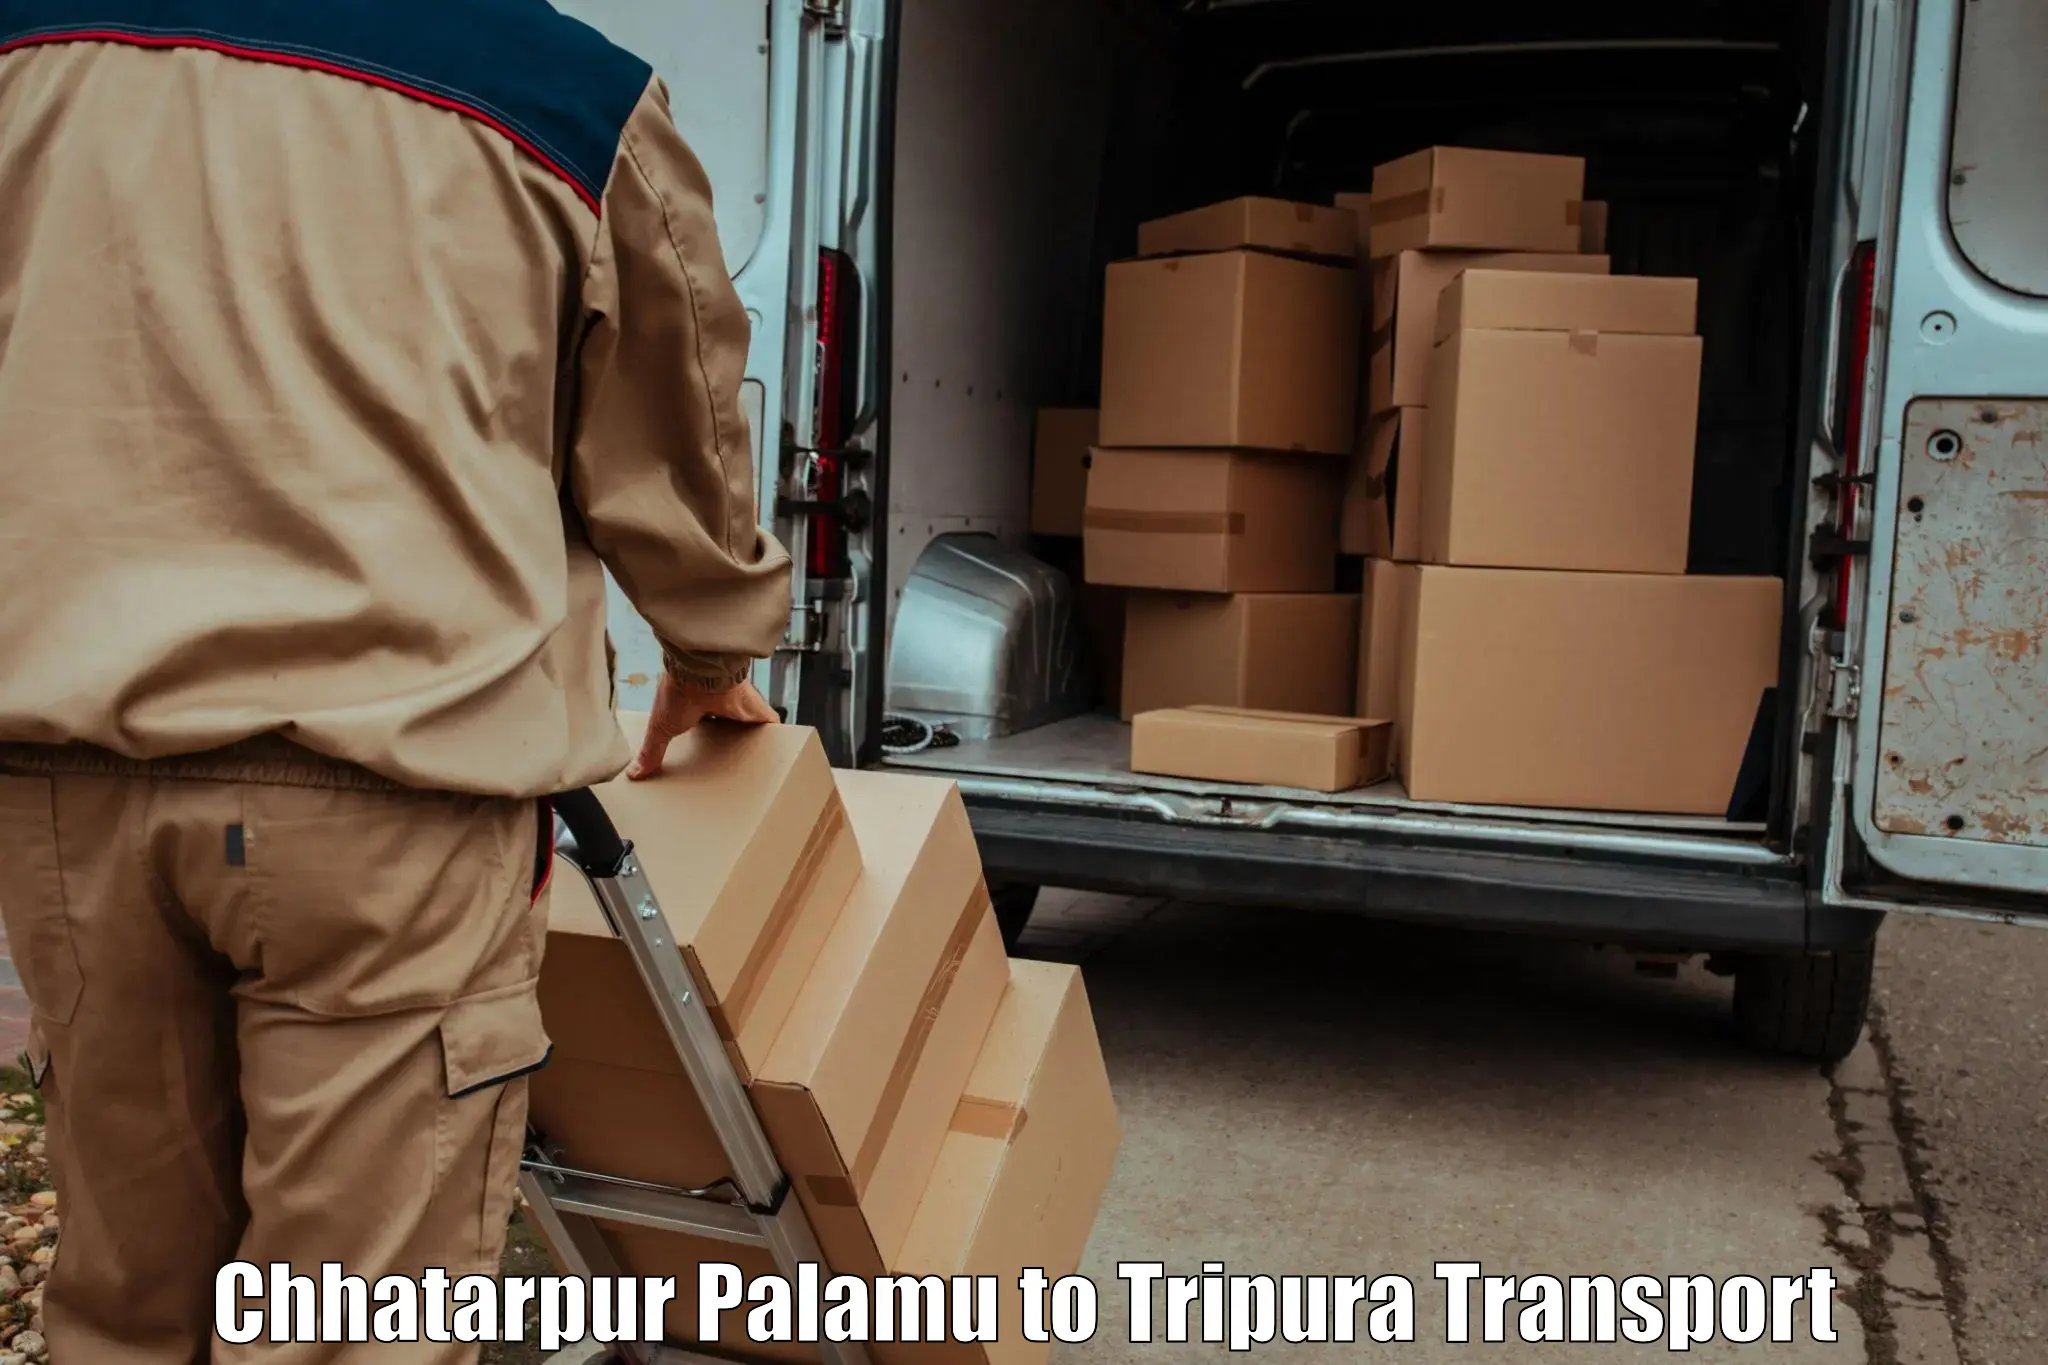 Vehicle transport services in Chhatarpur Palamu to Dharmanagar